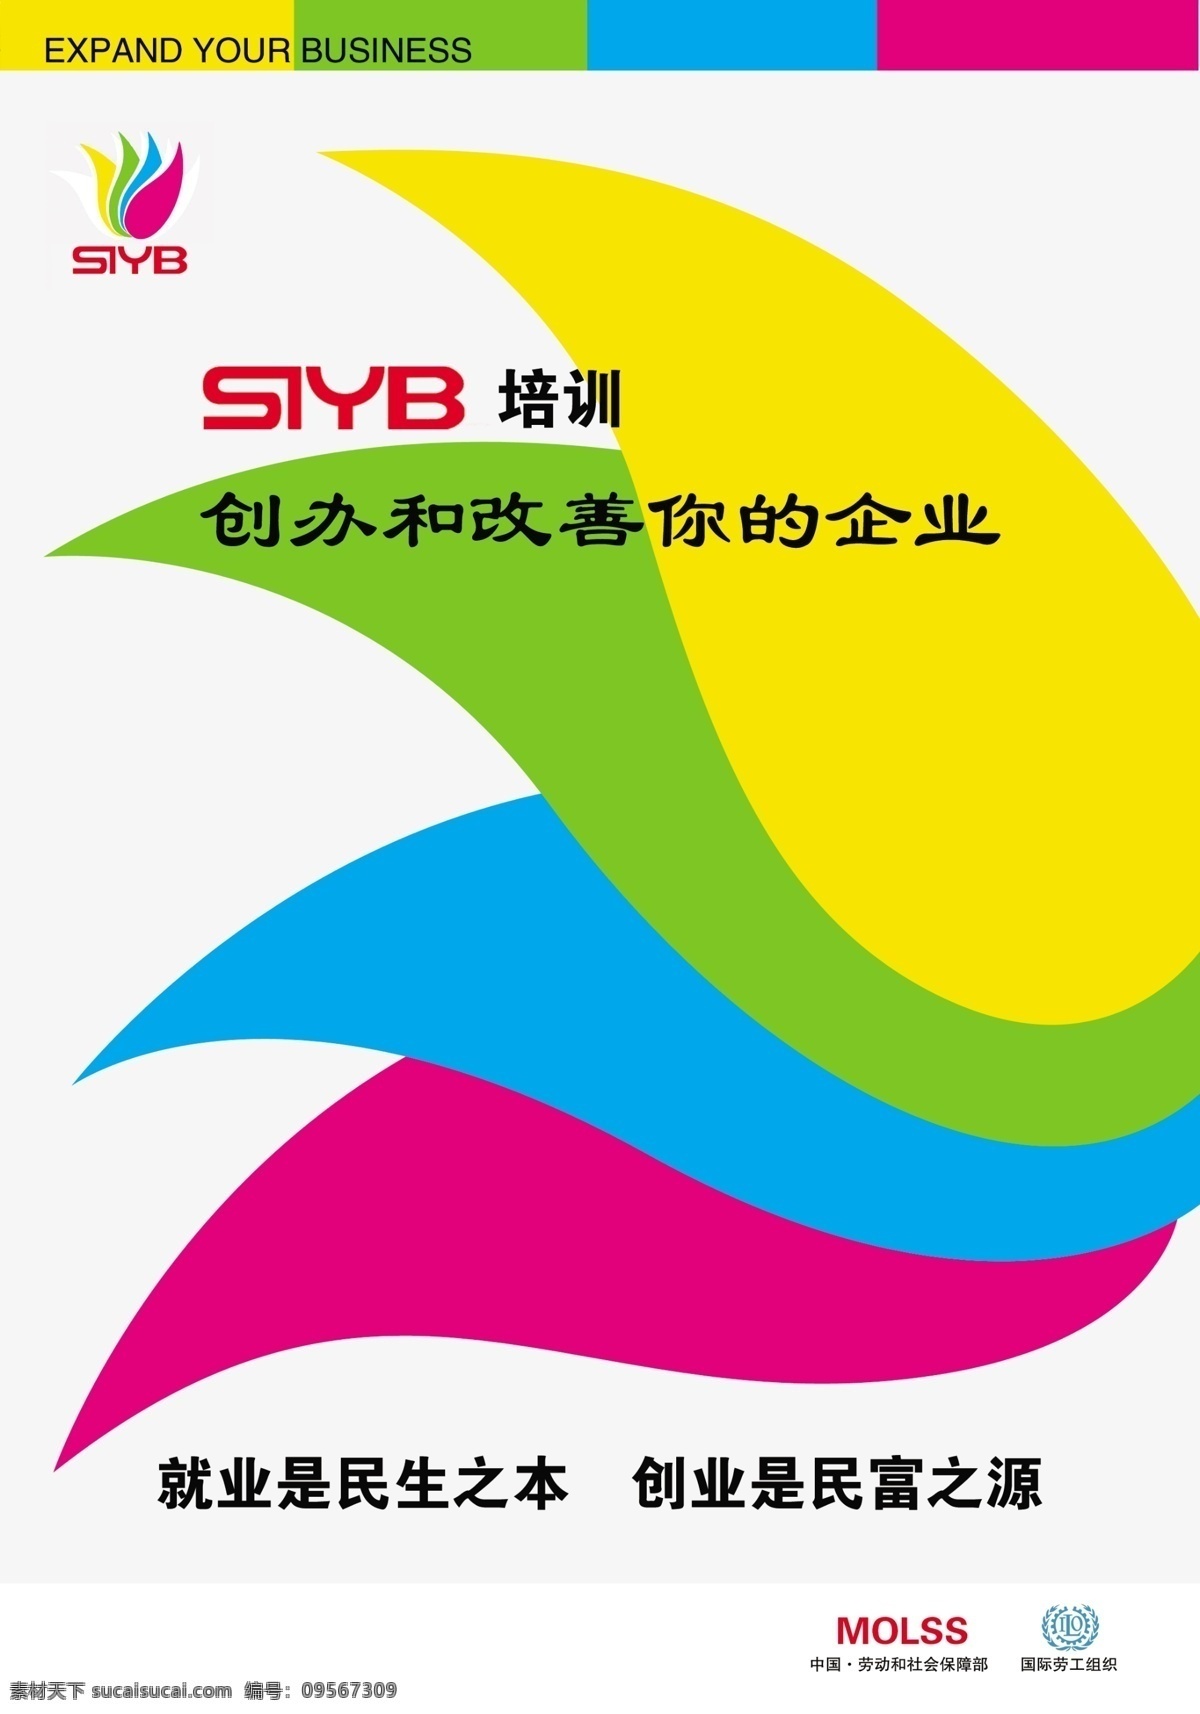 siyb 创业 培训 海报 就业 管理 扩大企业 广告设计模板 源文件